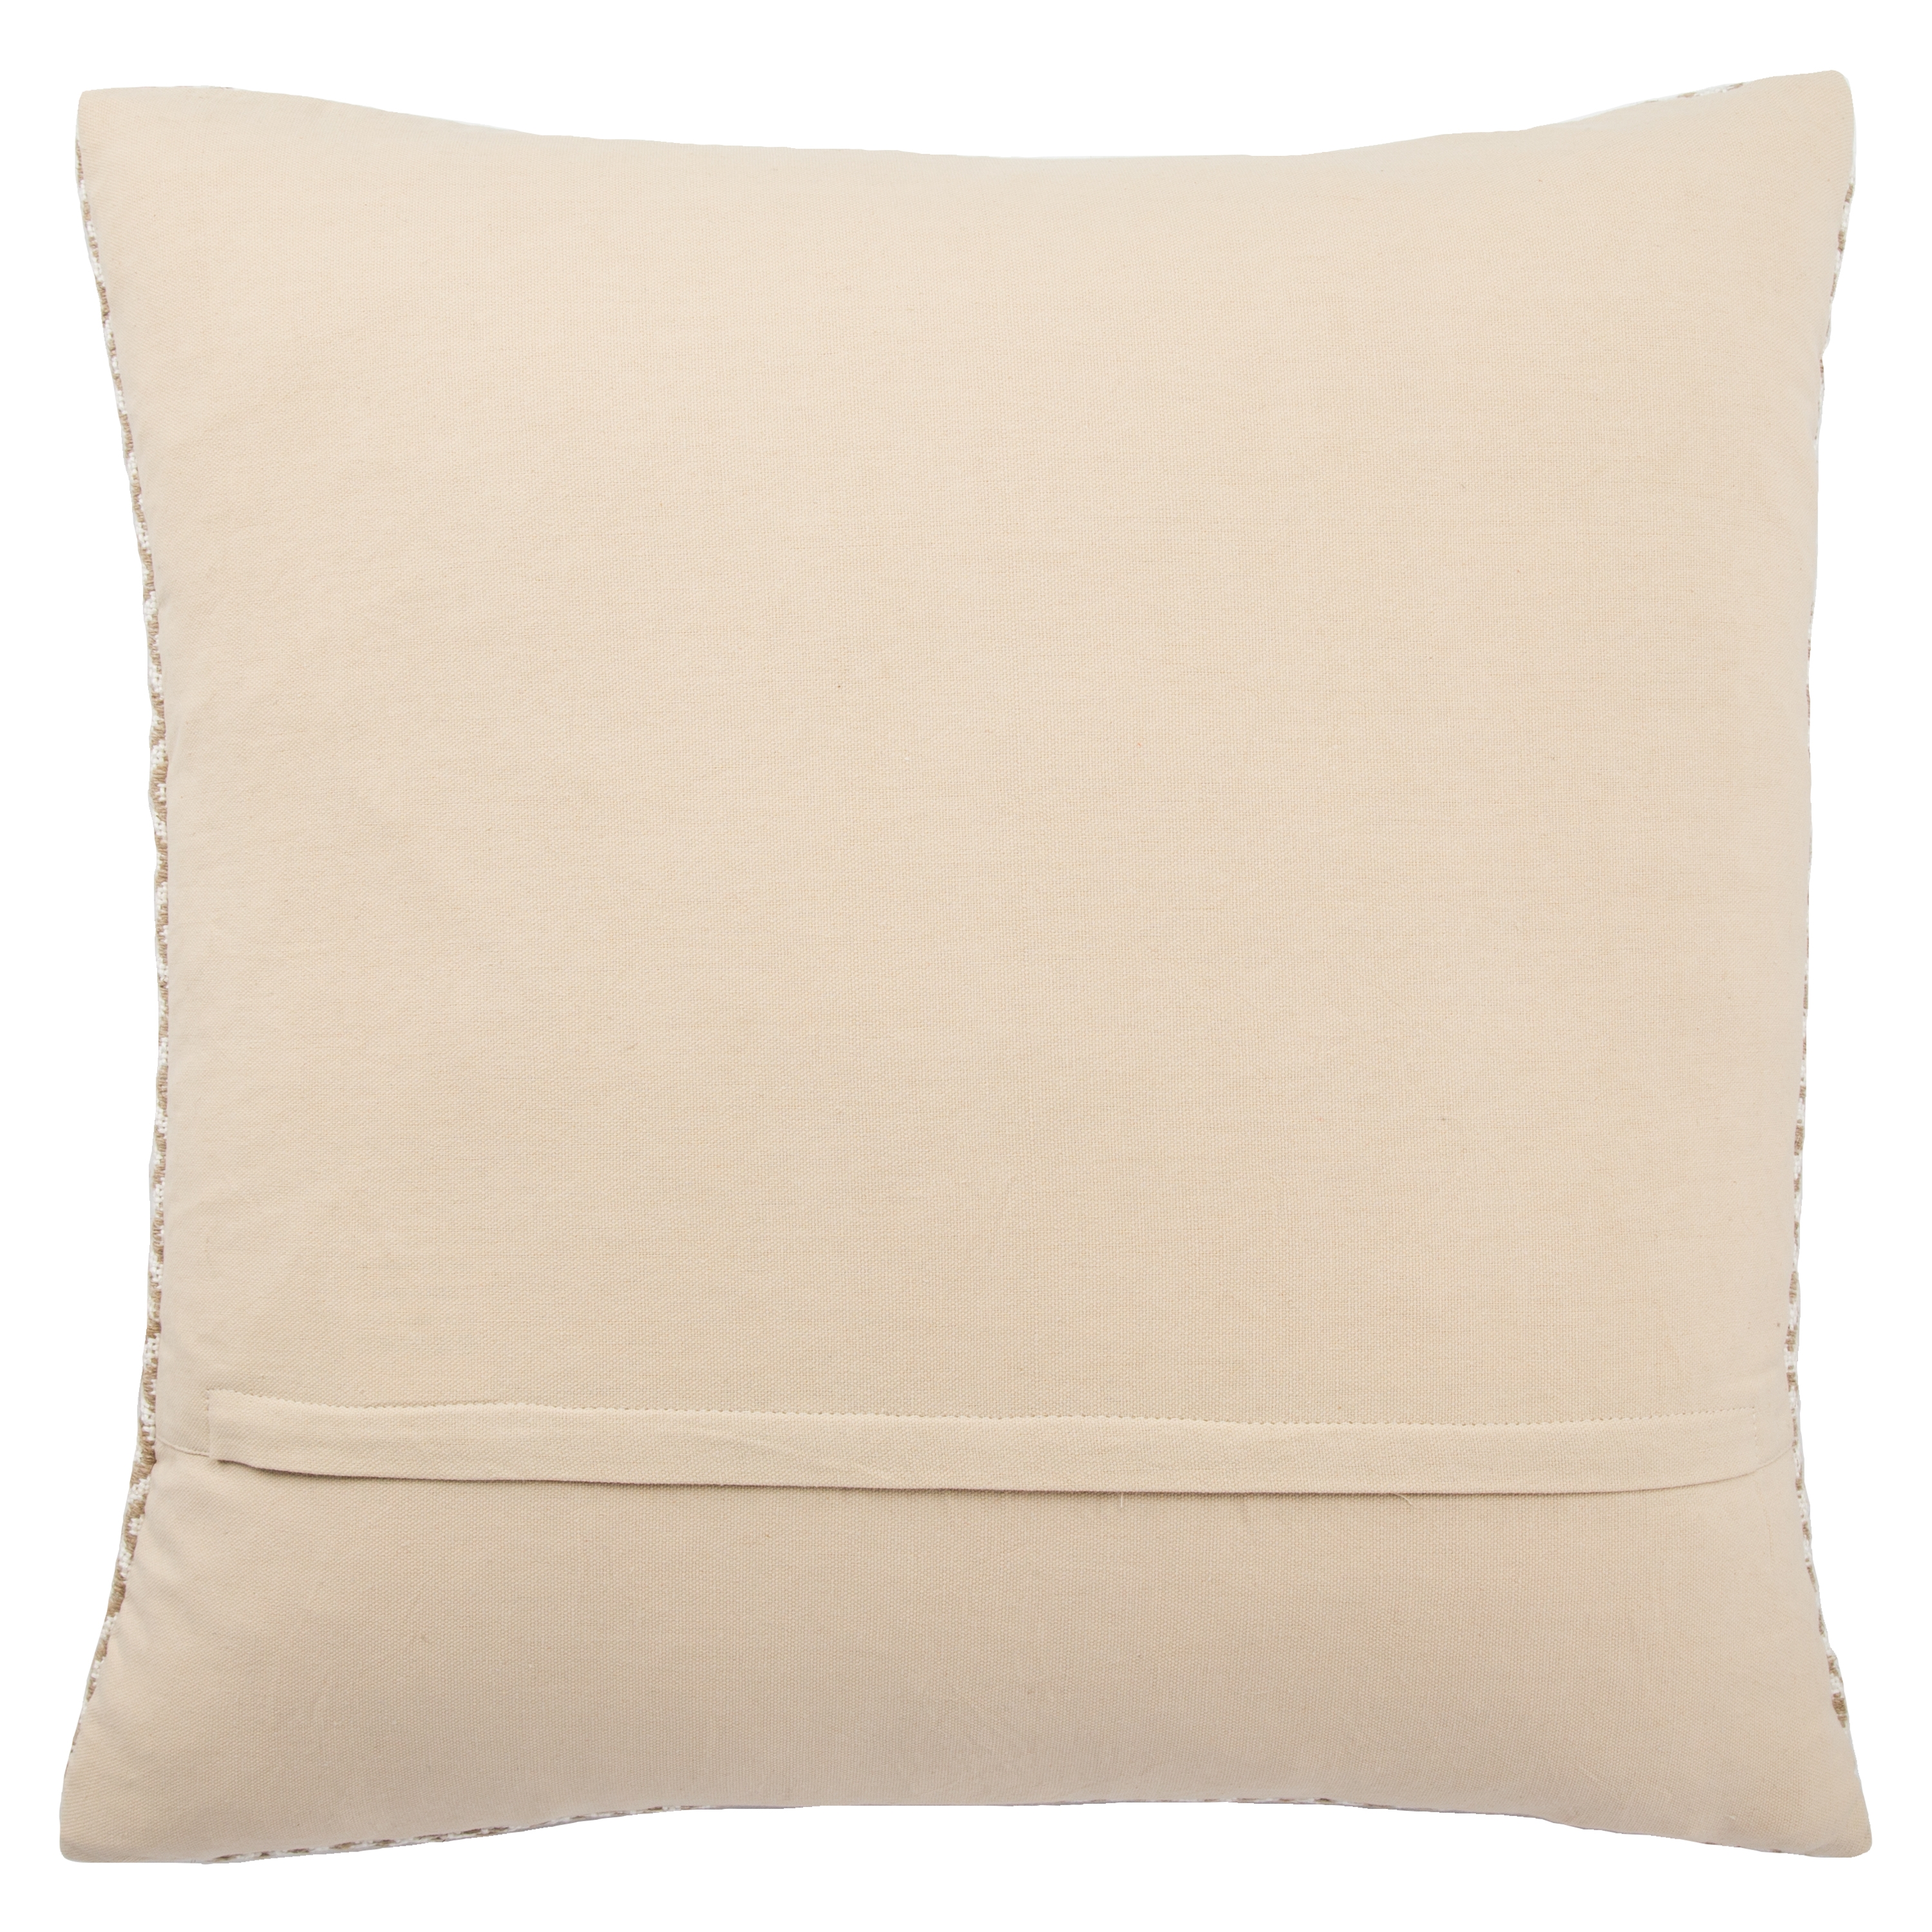 Design (US) White 22"X22" Pillow - Image 1